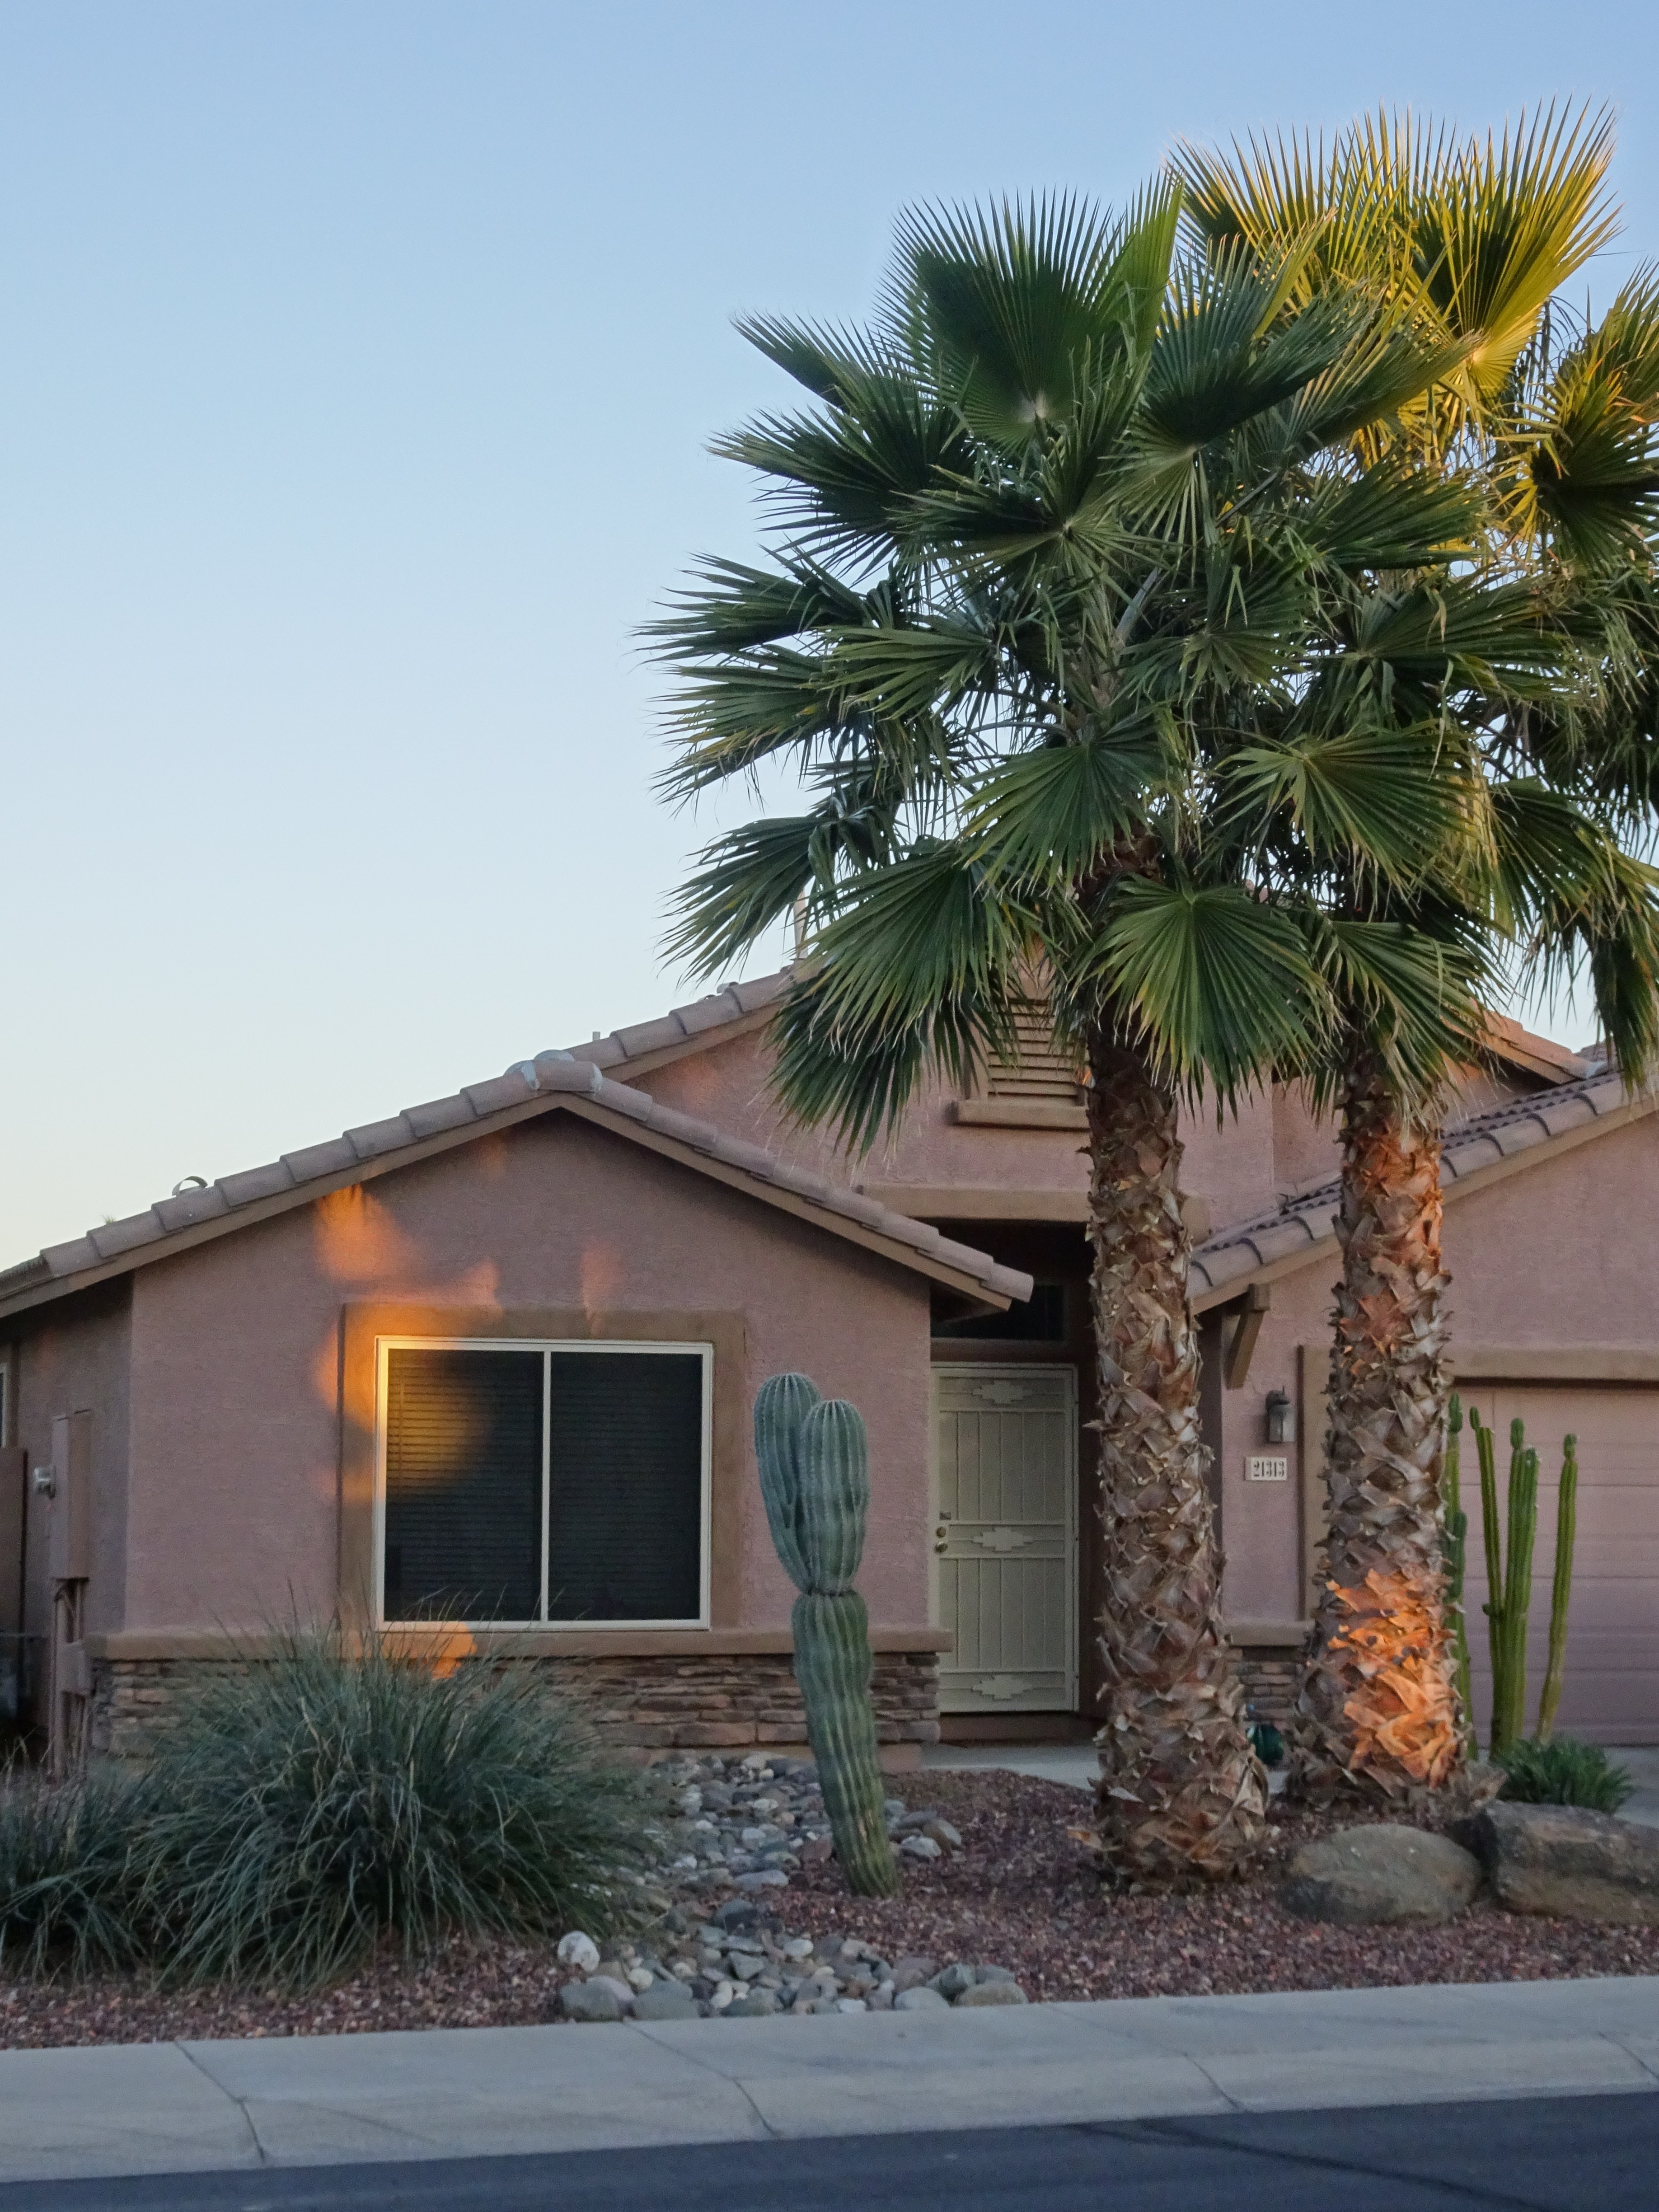 Single-family home in Phoenix